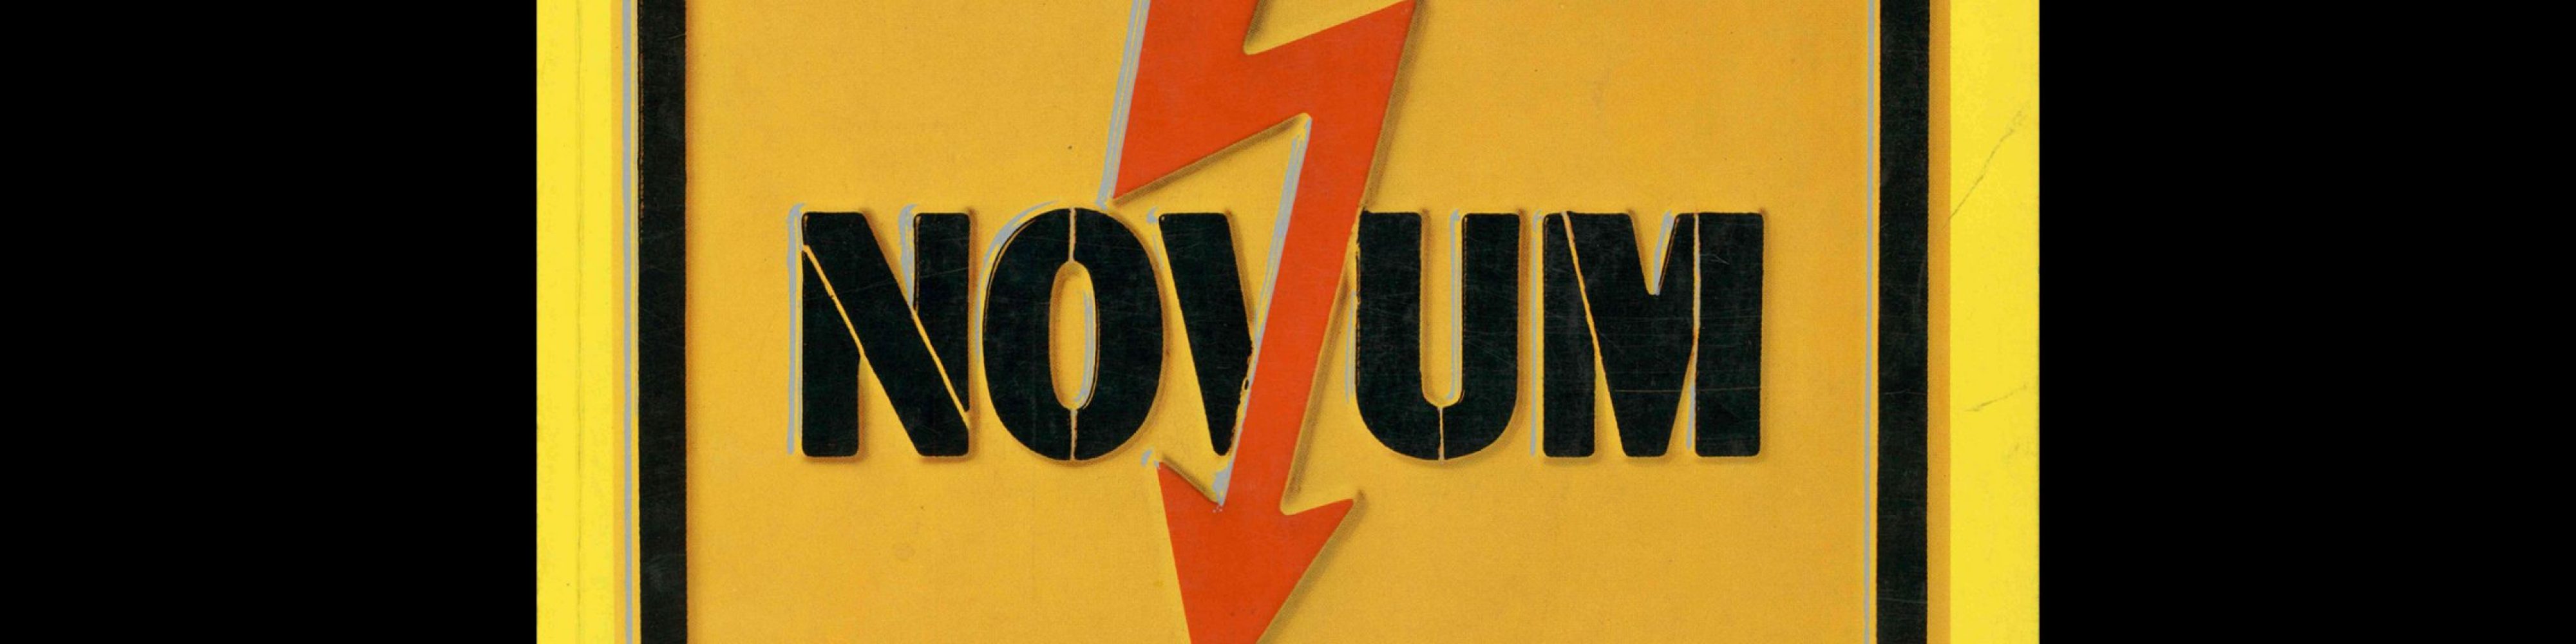 Novum Gebrauchsgraphik, 11, 1973. Cover design by Graphicteam Köln